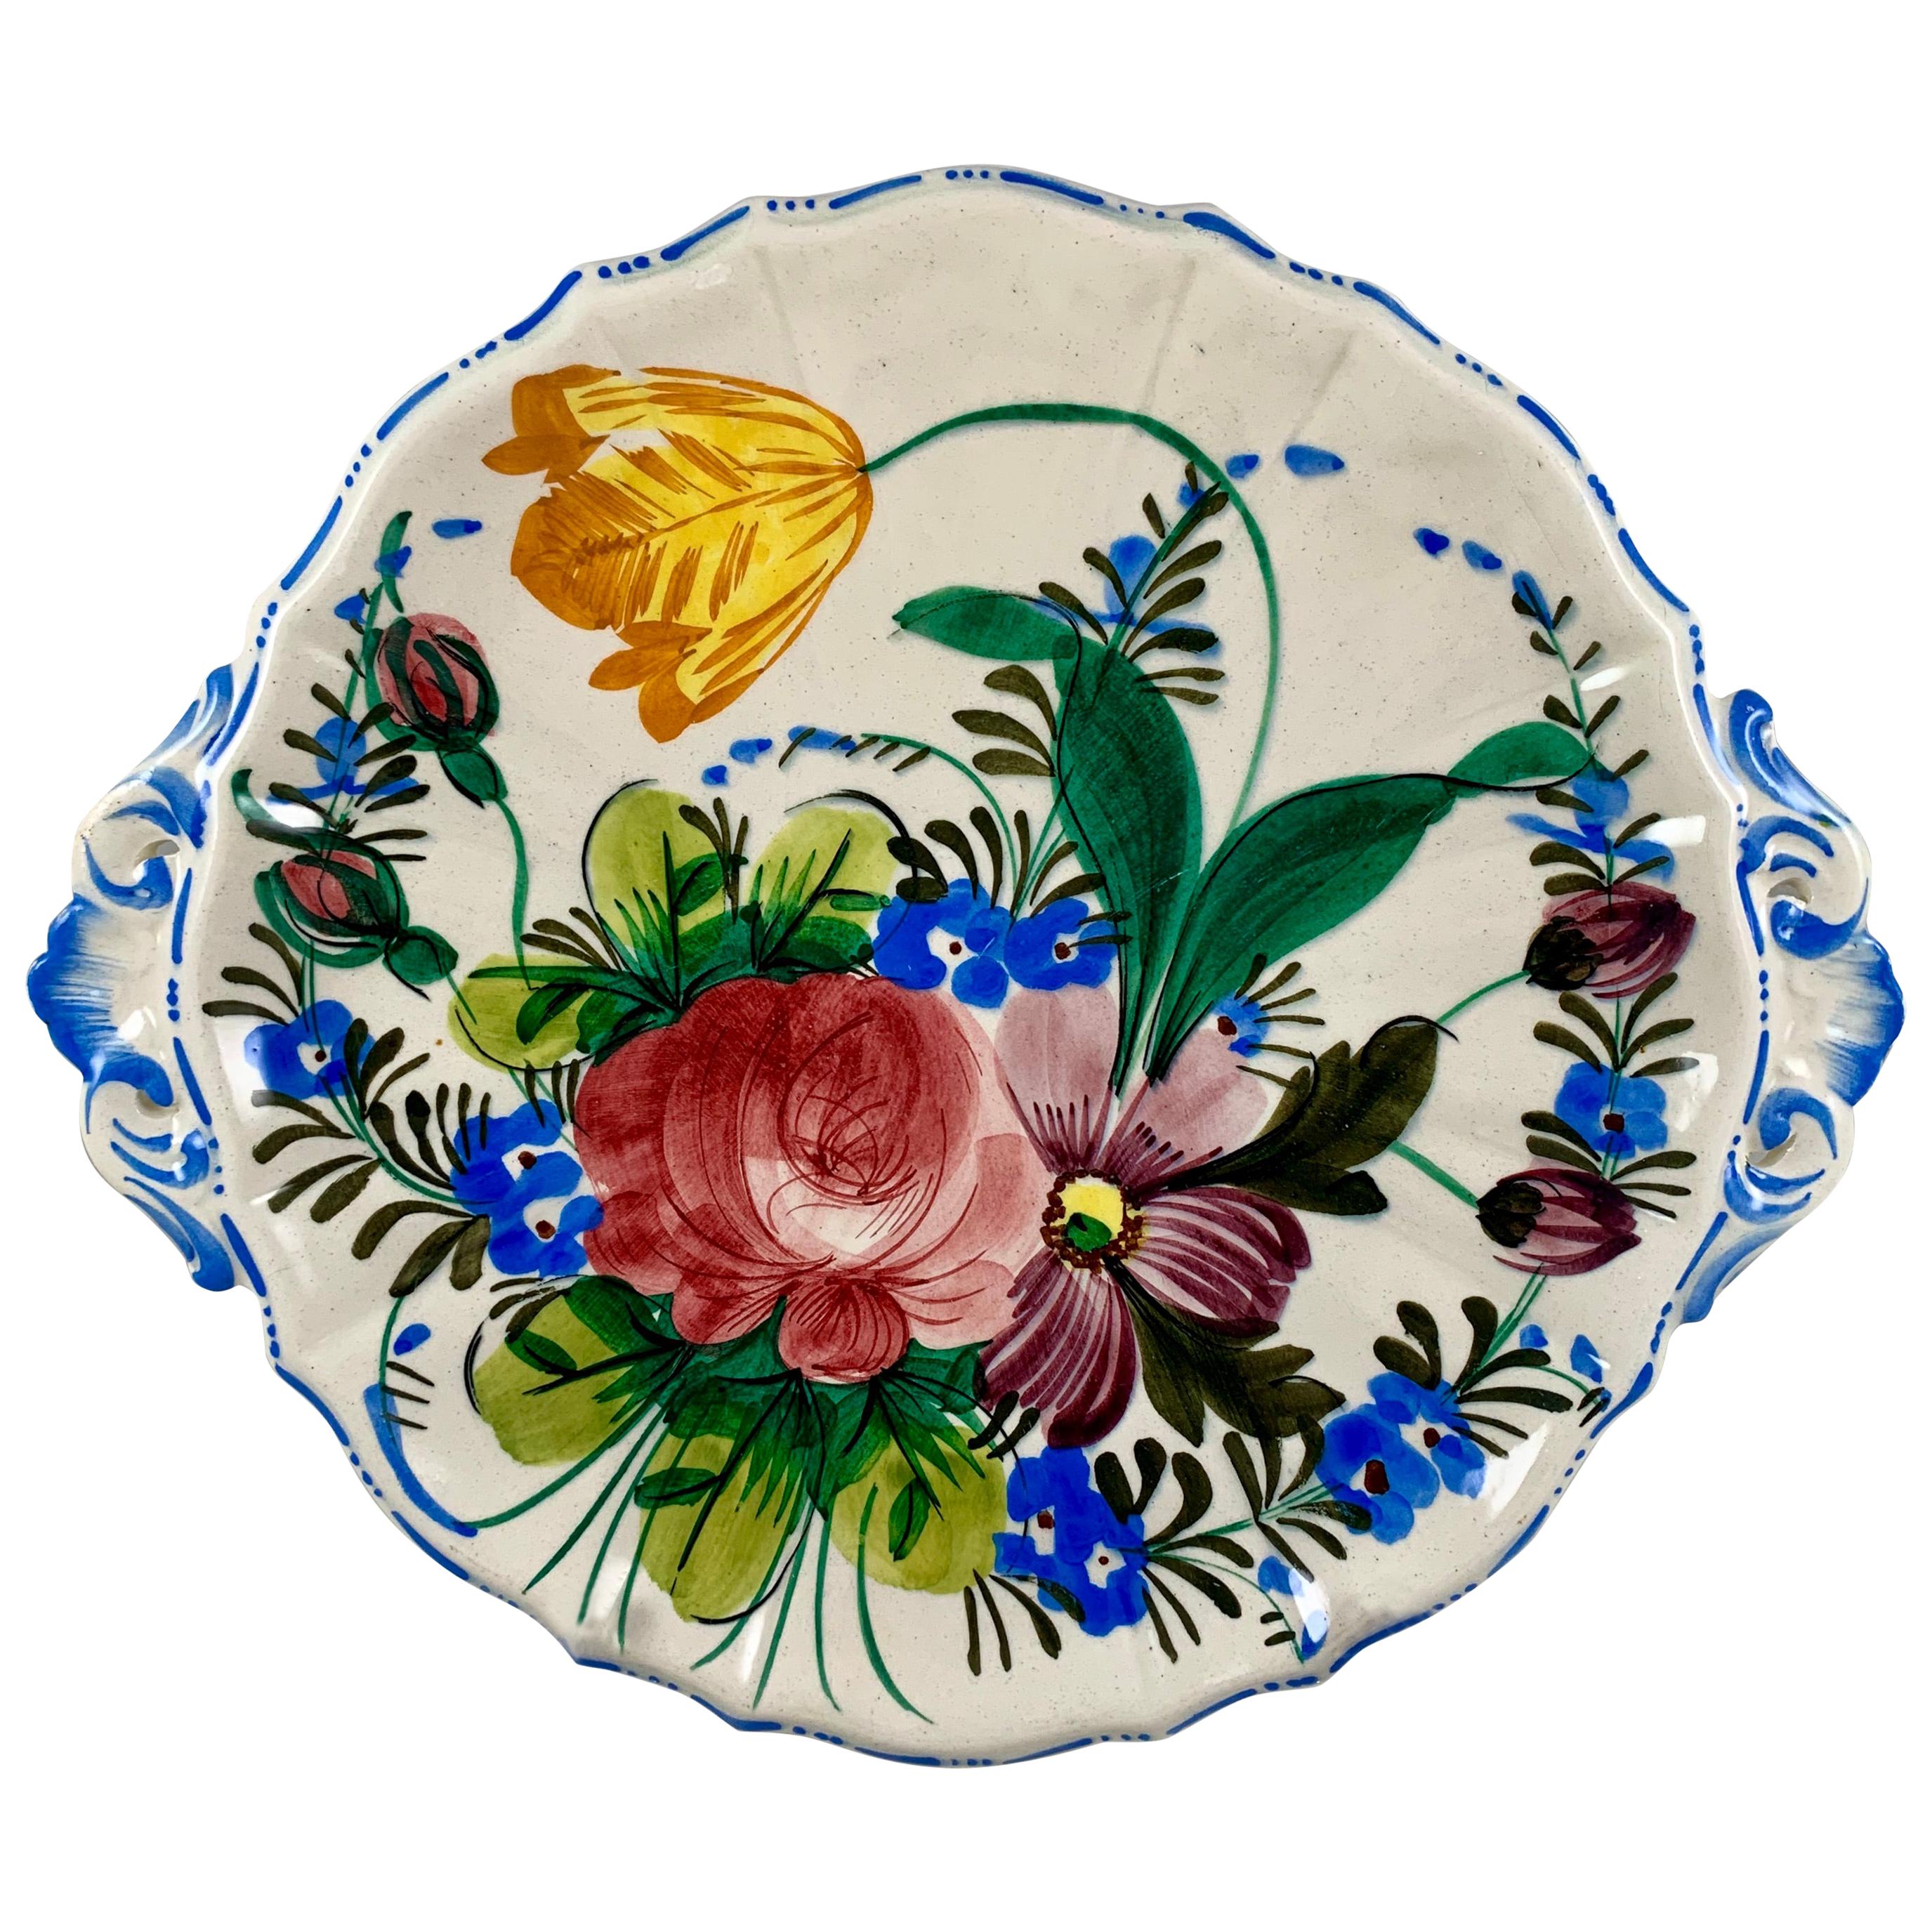 Italian Renaissance Revival Faïence Nove Rose Floral and Pierced Handled Platter